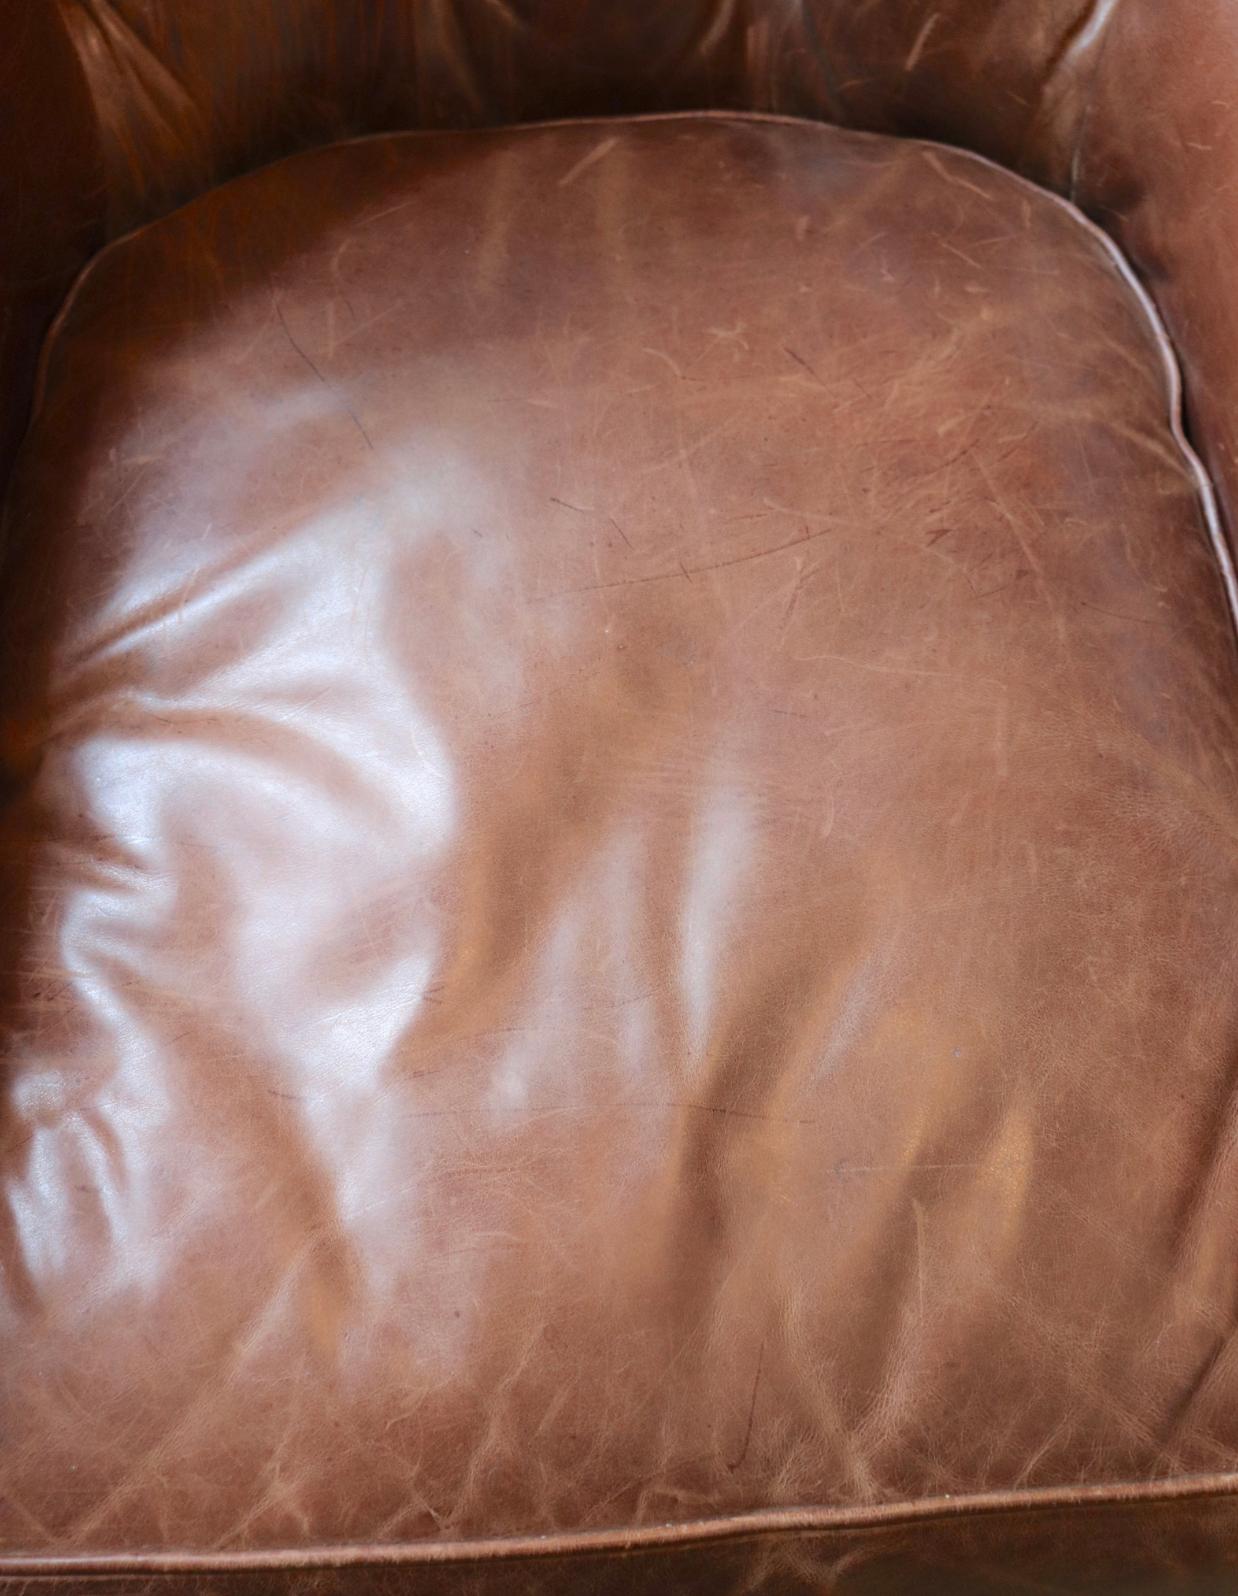 henredon leather chair